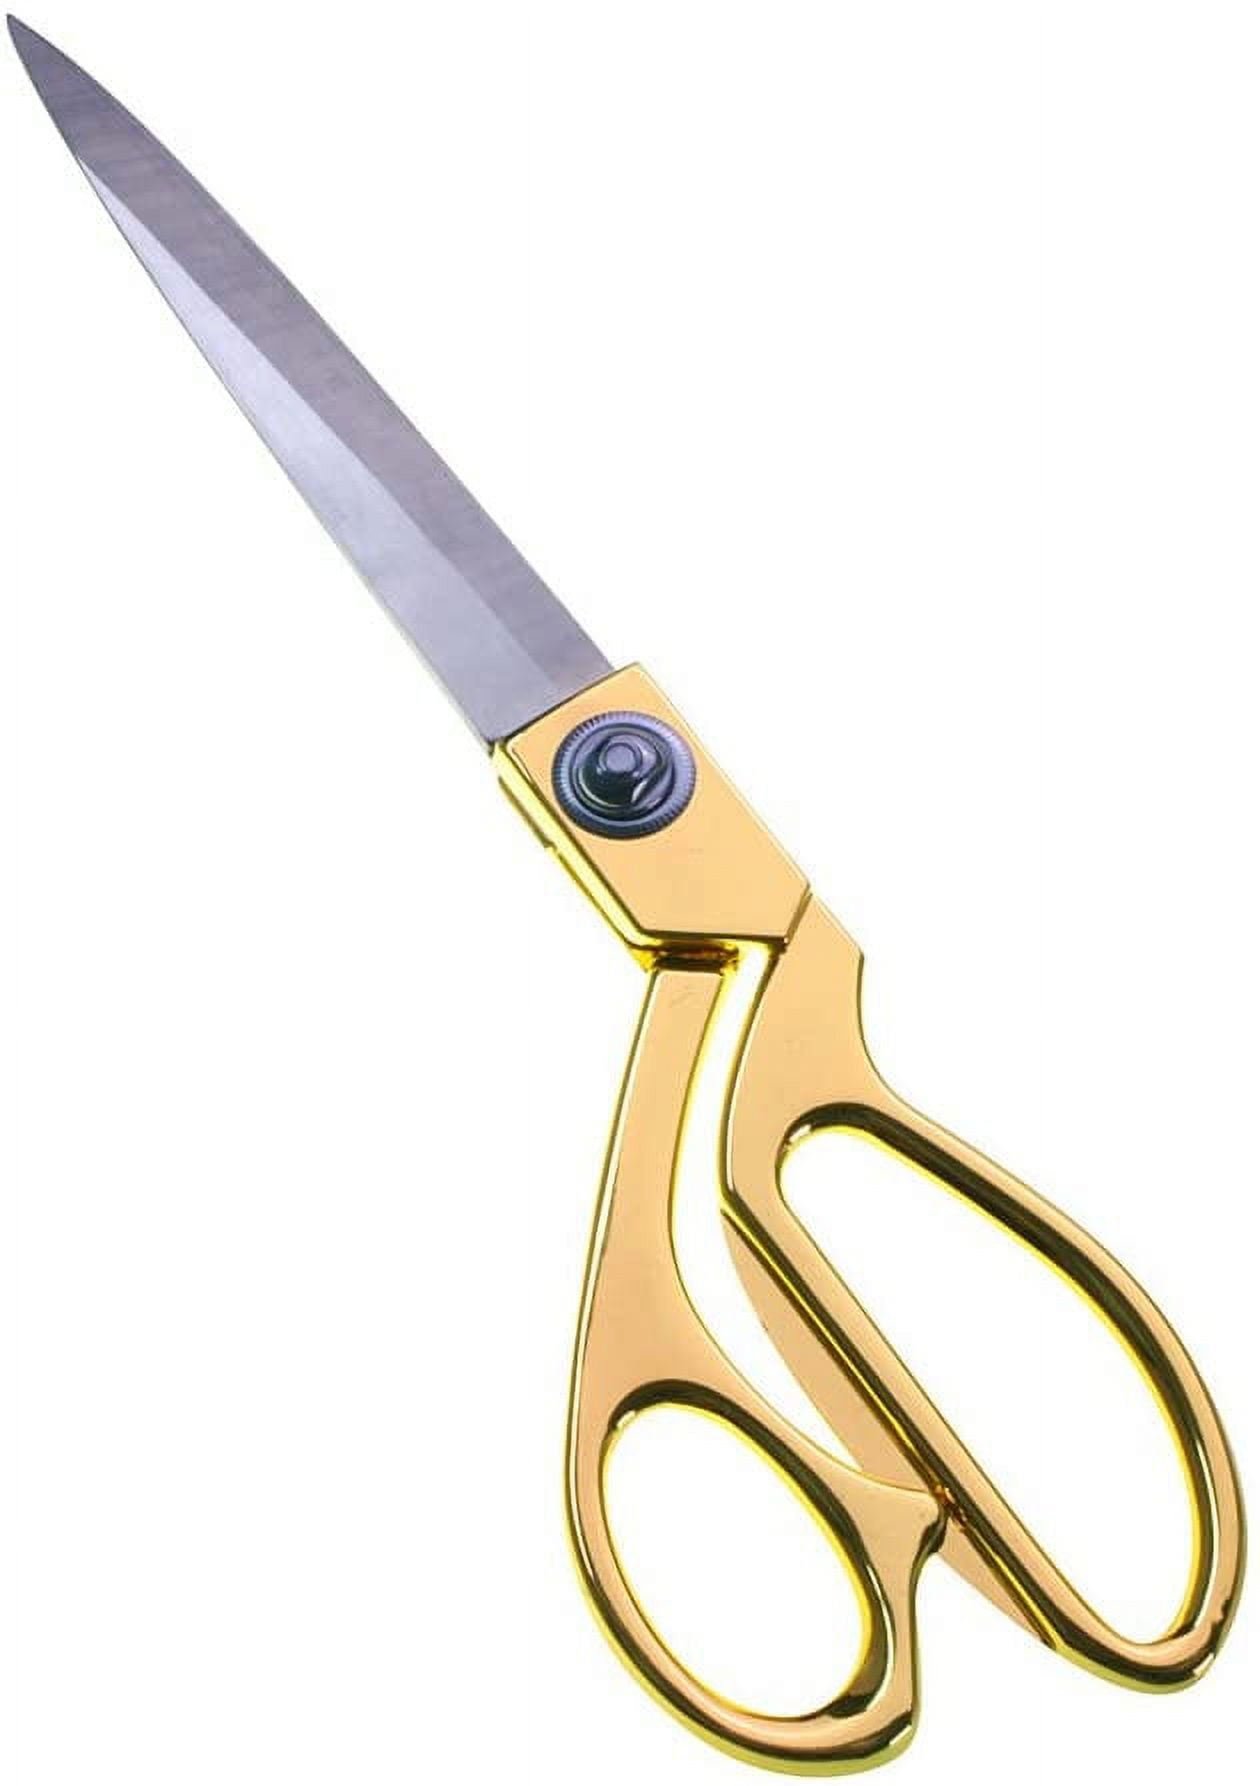 30-Inch Ribbon Cutting Scissors - Black